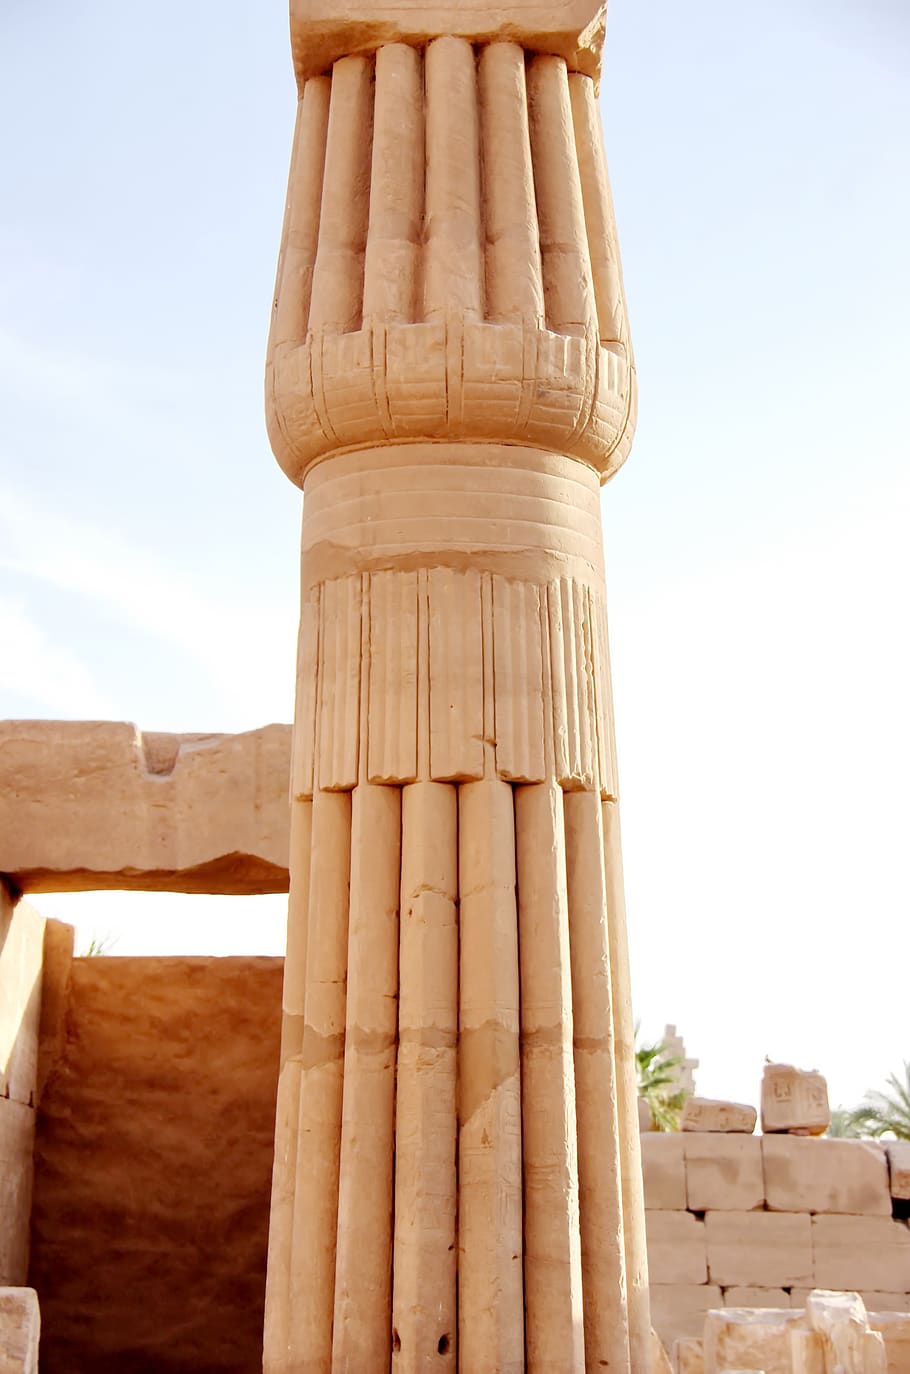 egypt, karnak, column, engraving, column papyriforme, architecture, antique, pierre, sculpture, travel